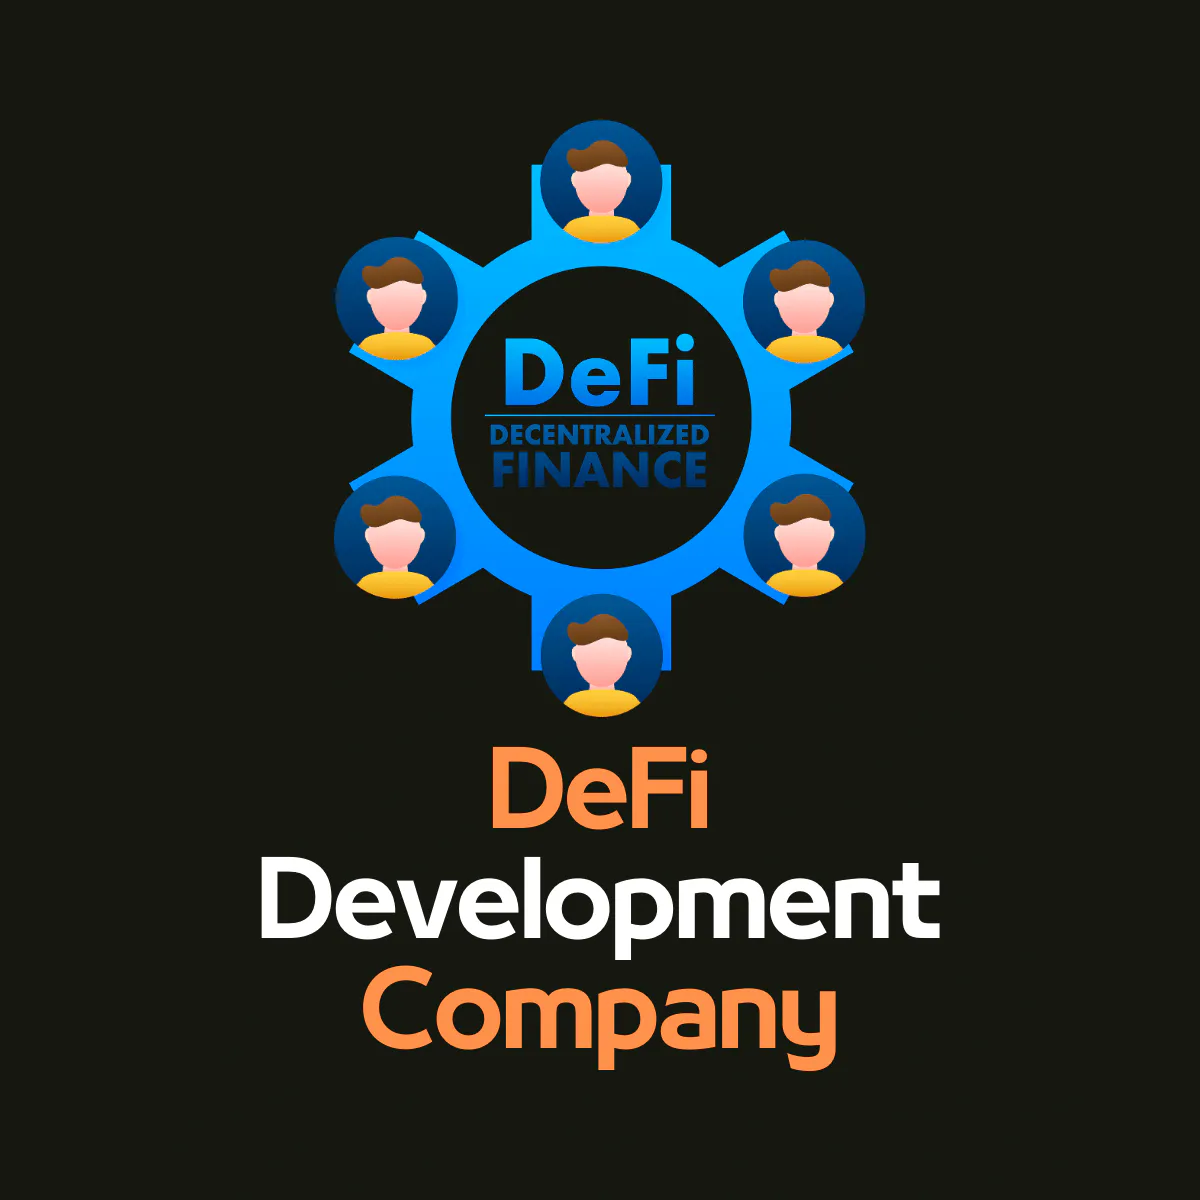 DeFi Development